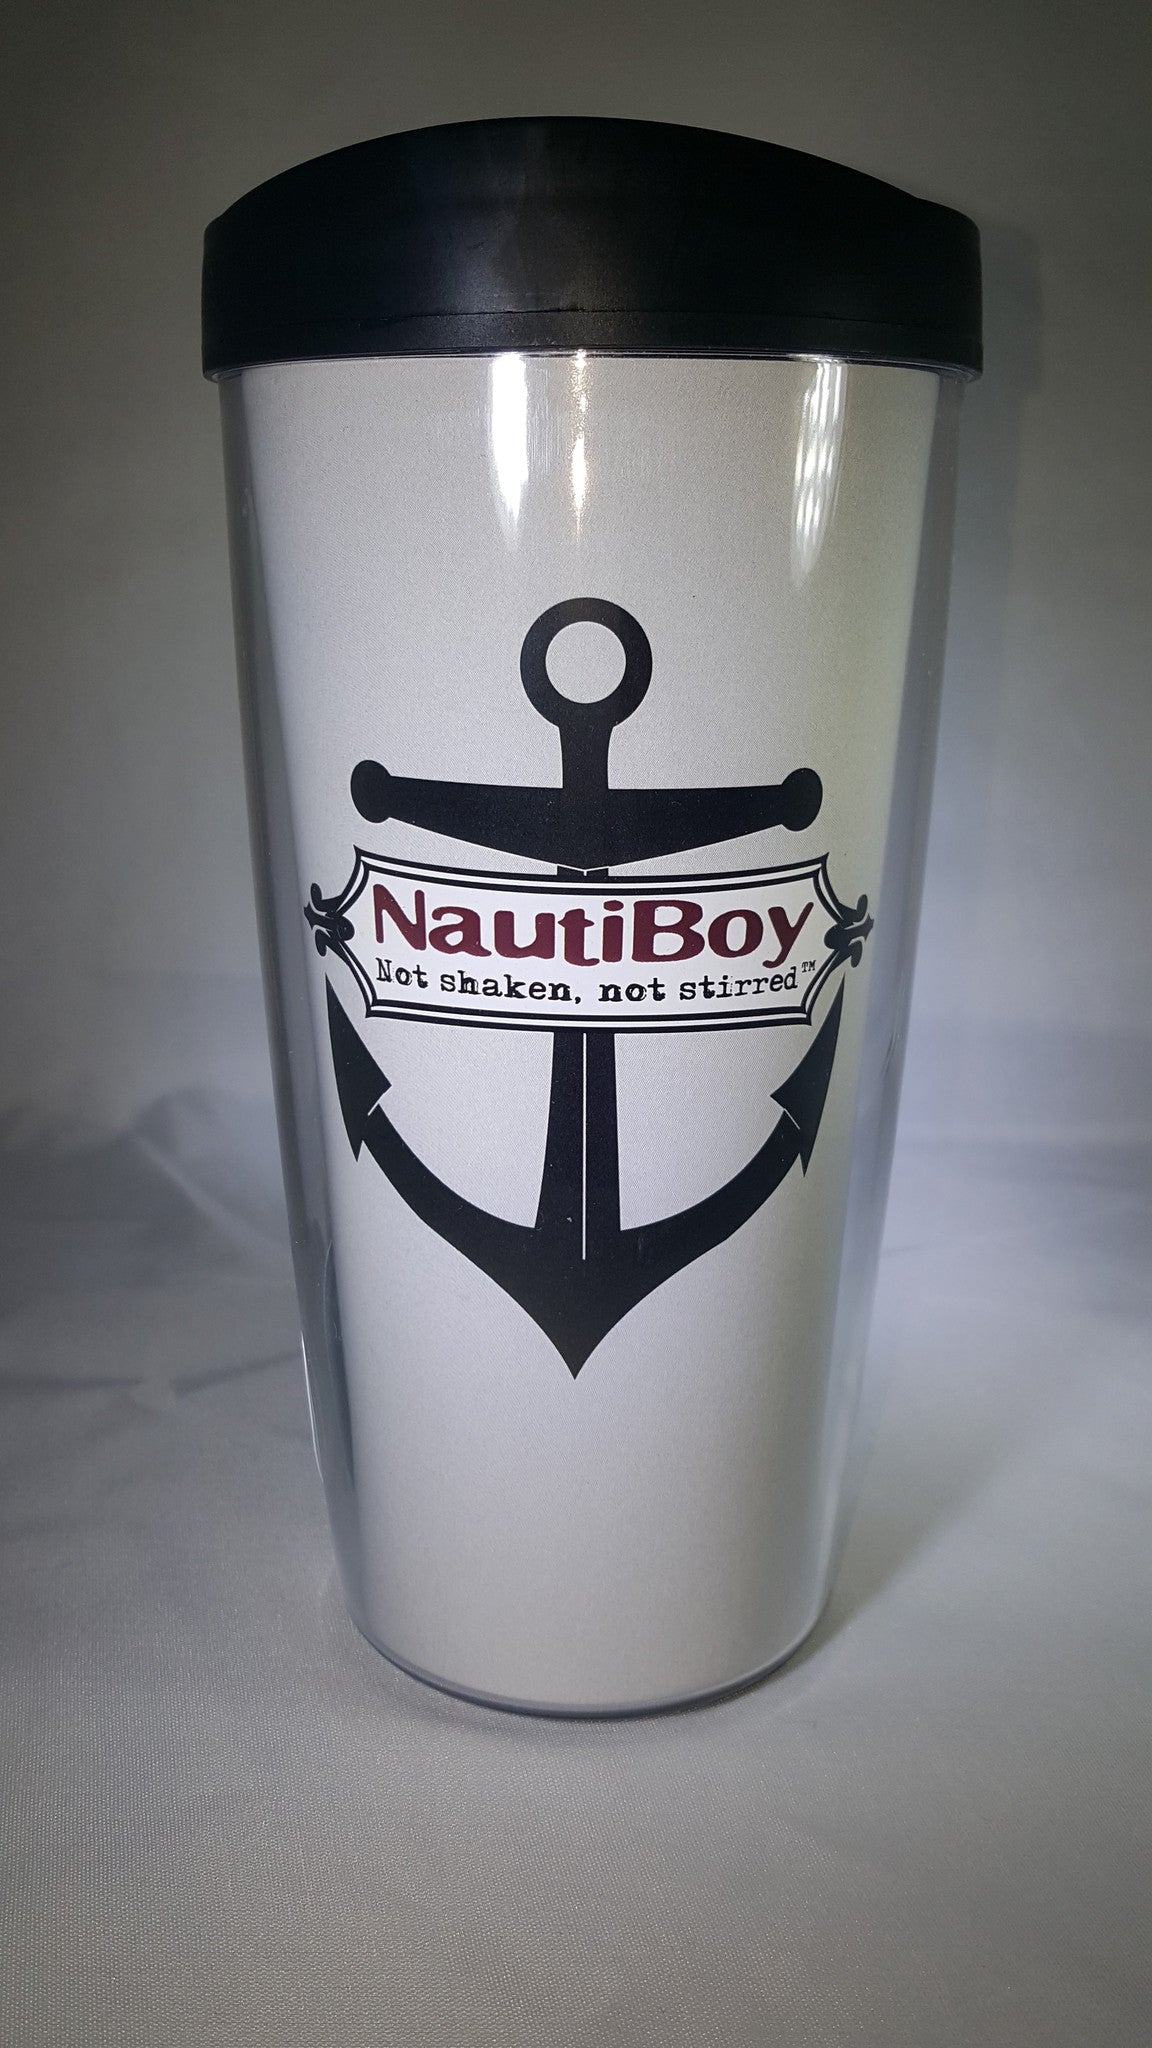 NEW! NautiBoy Travel Tumbler made in the USA